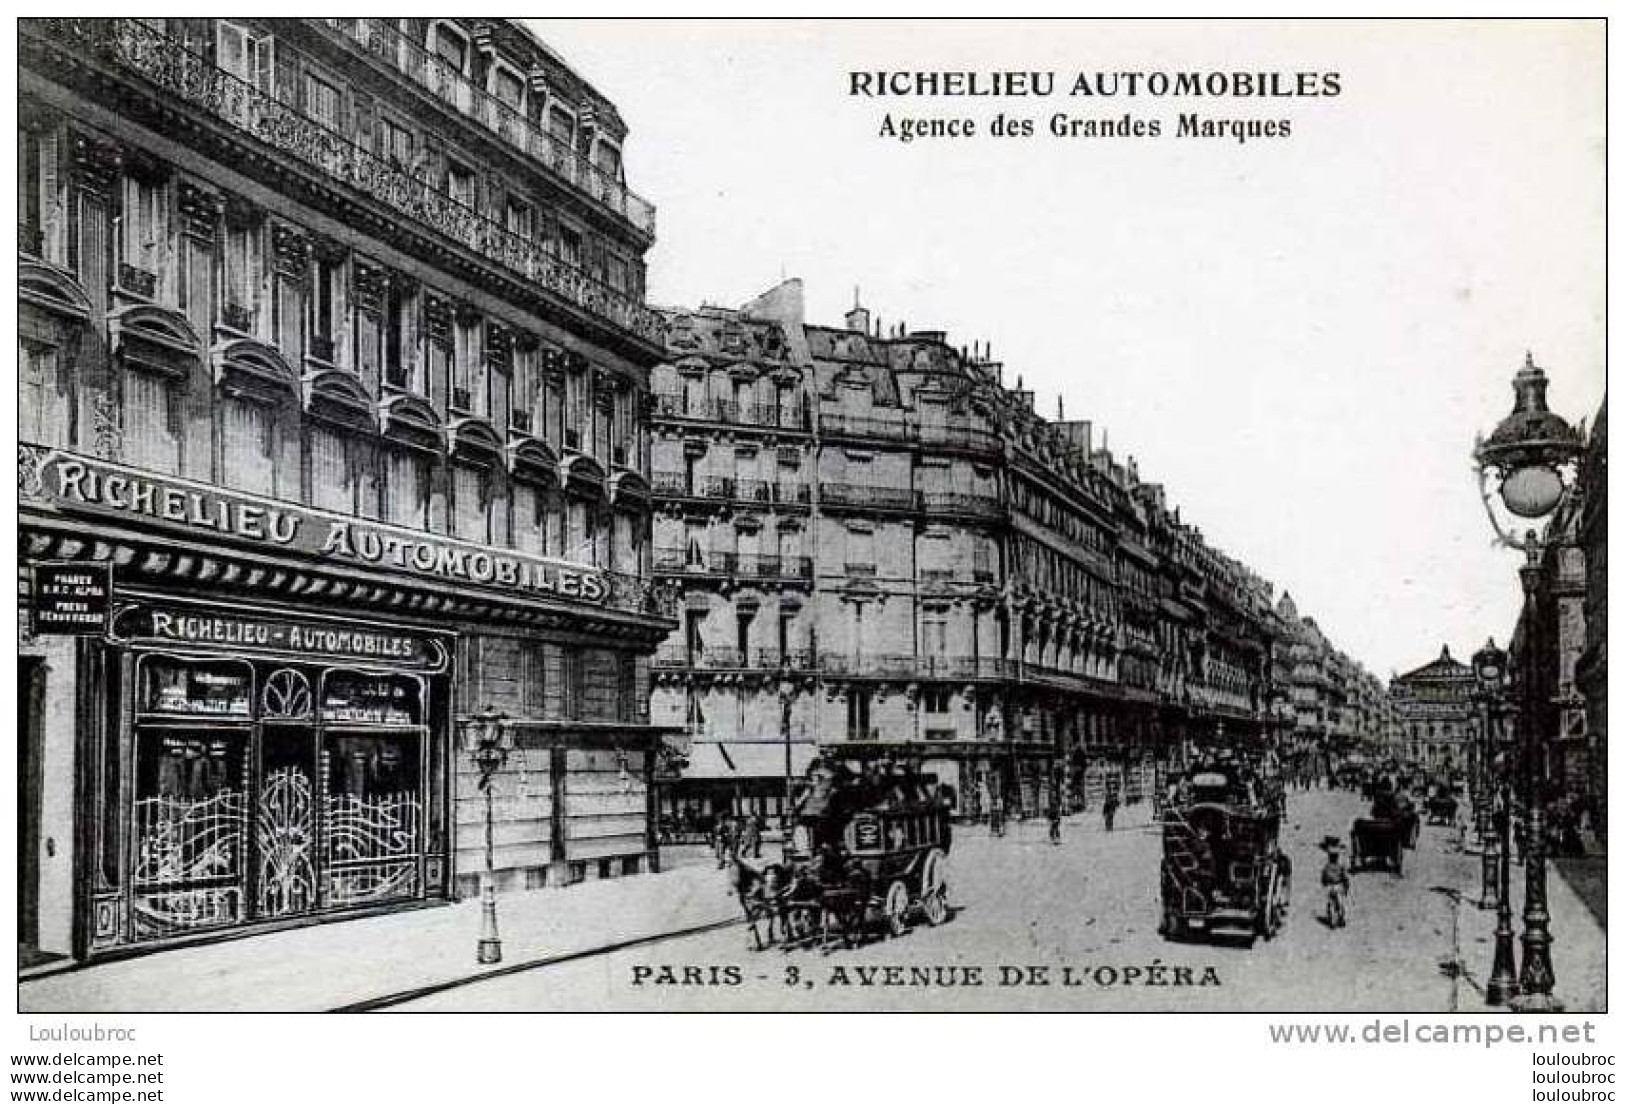 75 PARIS RICHELIEU AUTOMOBILES AGENCE DE GRANDES MARQUES 3 AVENUE DE L'OPERA - Distretto: 02